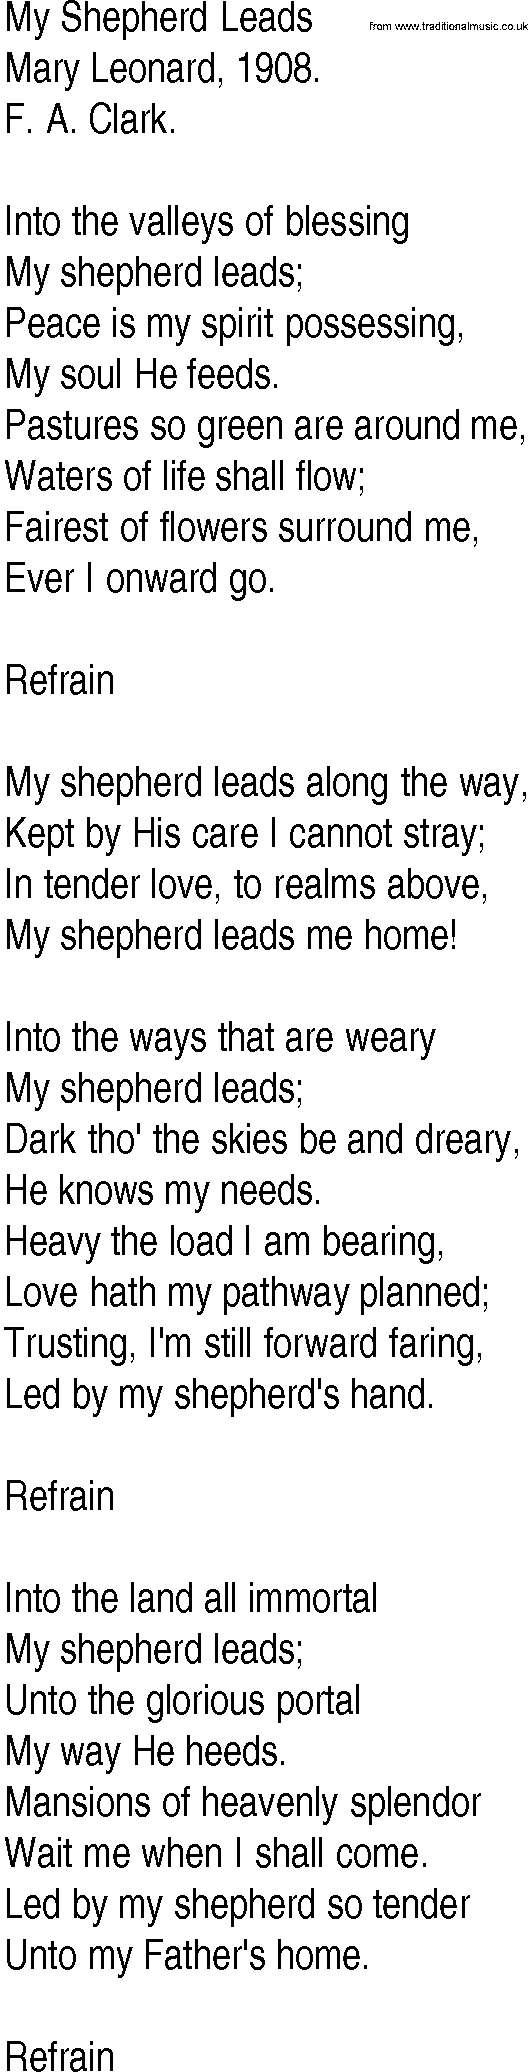 Hymn and Gospel Song: My Shepherd Leads by Mary Leonard lyrics